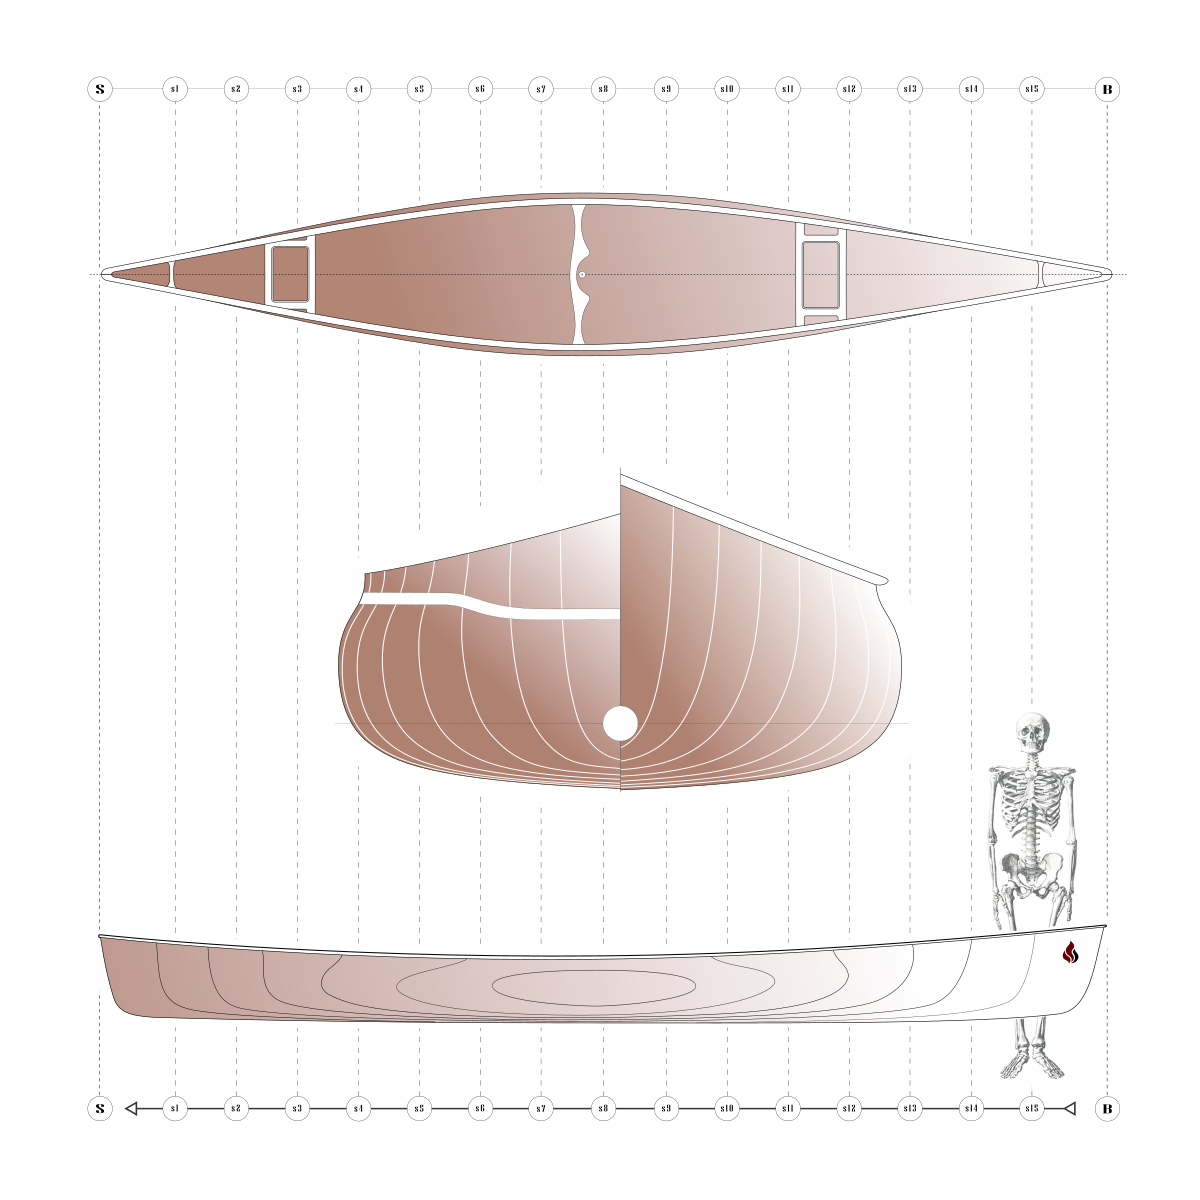 Tandem Canoe Plans – Lines